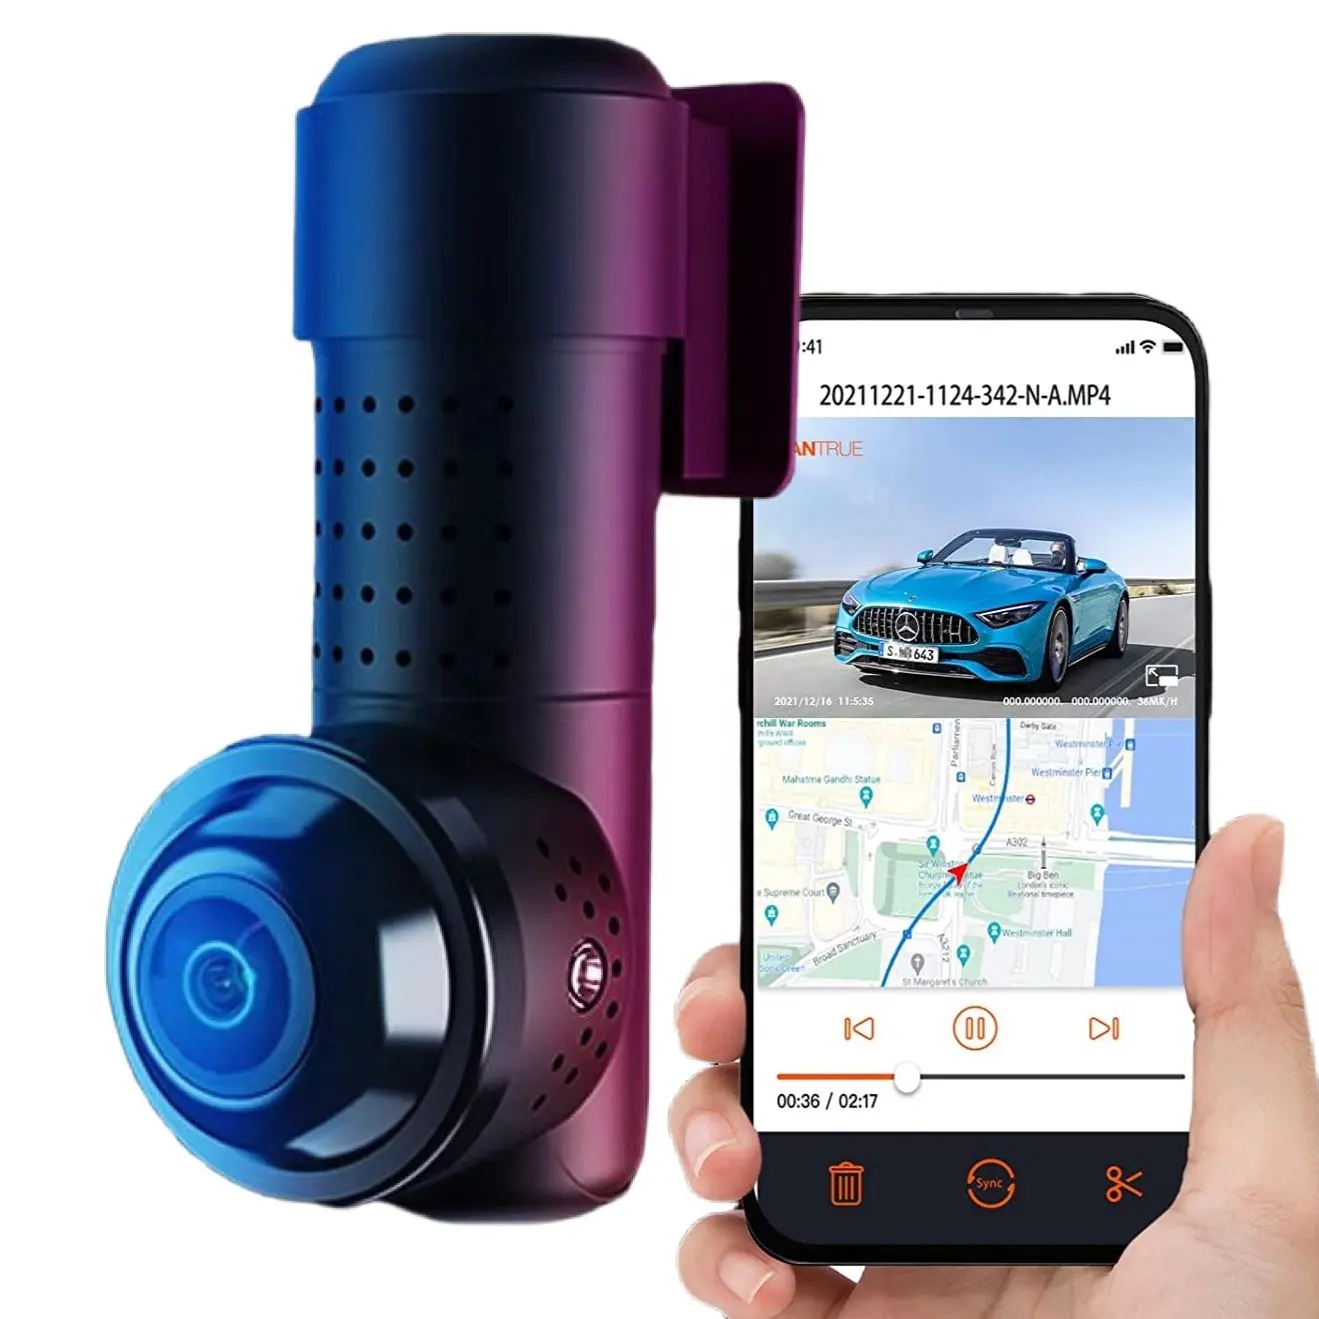 Panorama 360-degree 2160P driving recorder 4 camera in 1 shot Sony lens parking monitoring IR night vision WiFi dash cam 4K